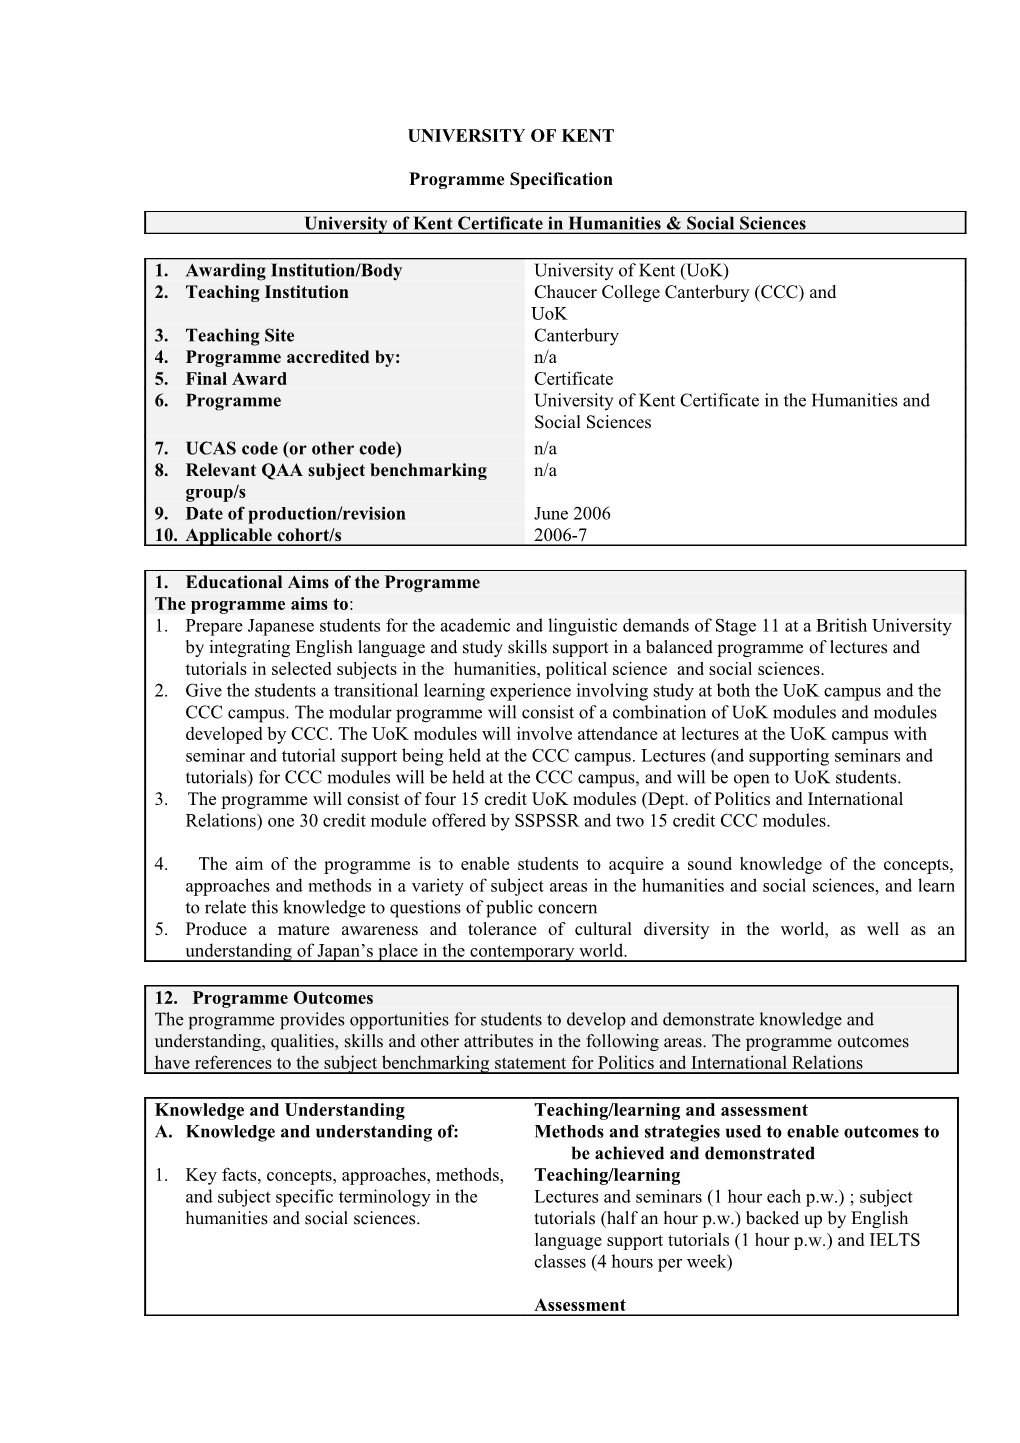 University of Kent Certificate Programme Specifications